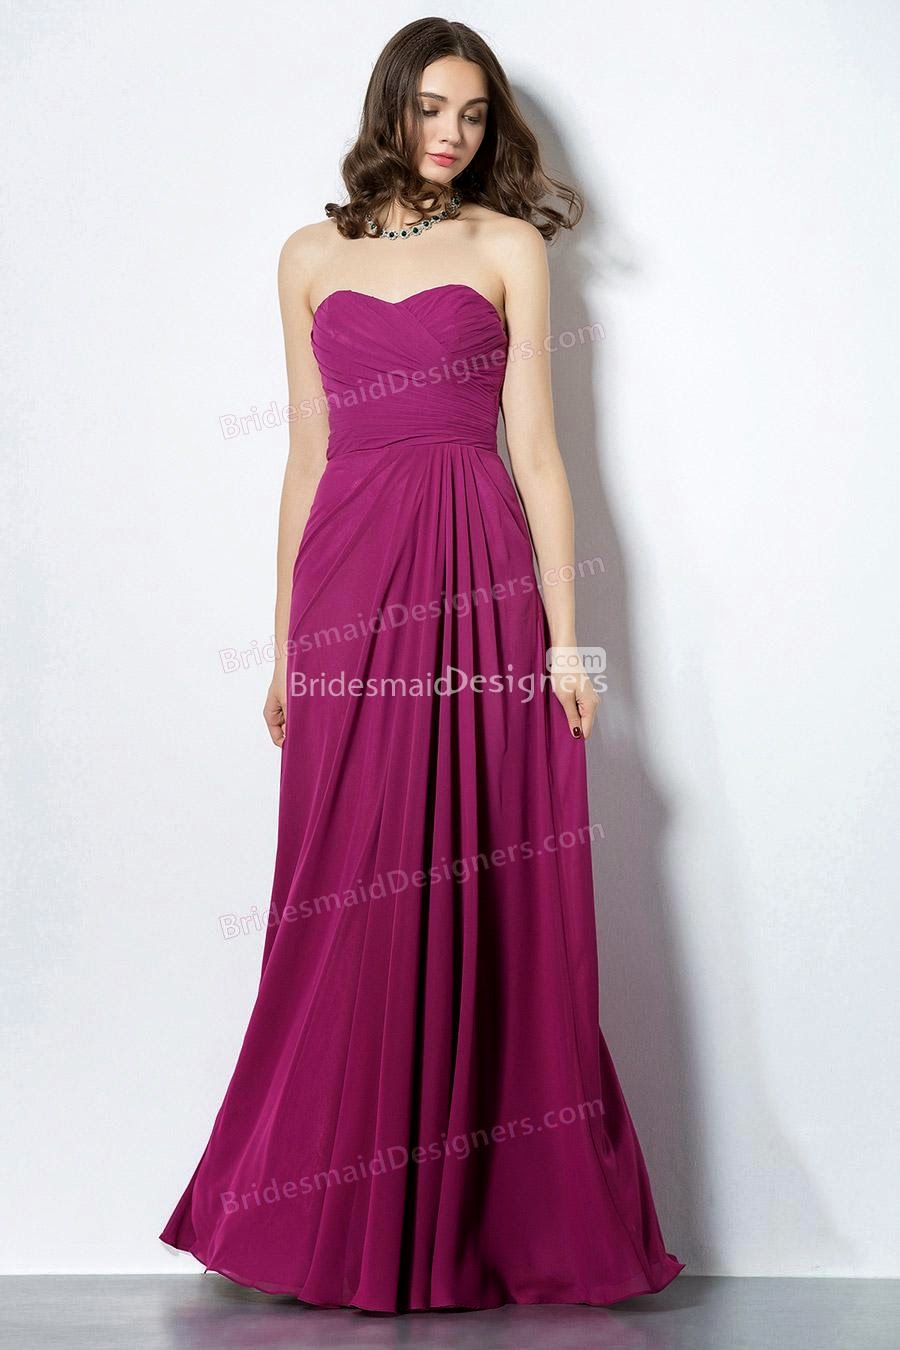 http://www.bridesmaiddesigners.com/simple-plum-strapless-sweetheart-long-chiffon-bridesmaid-dress-1124.html